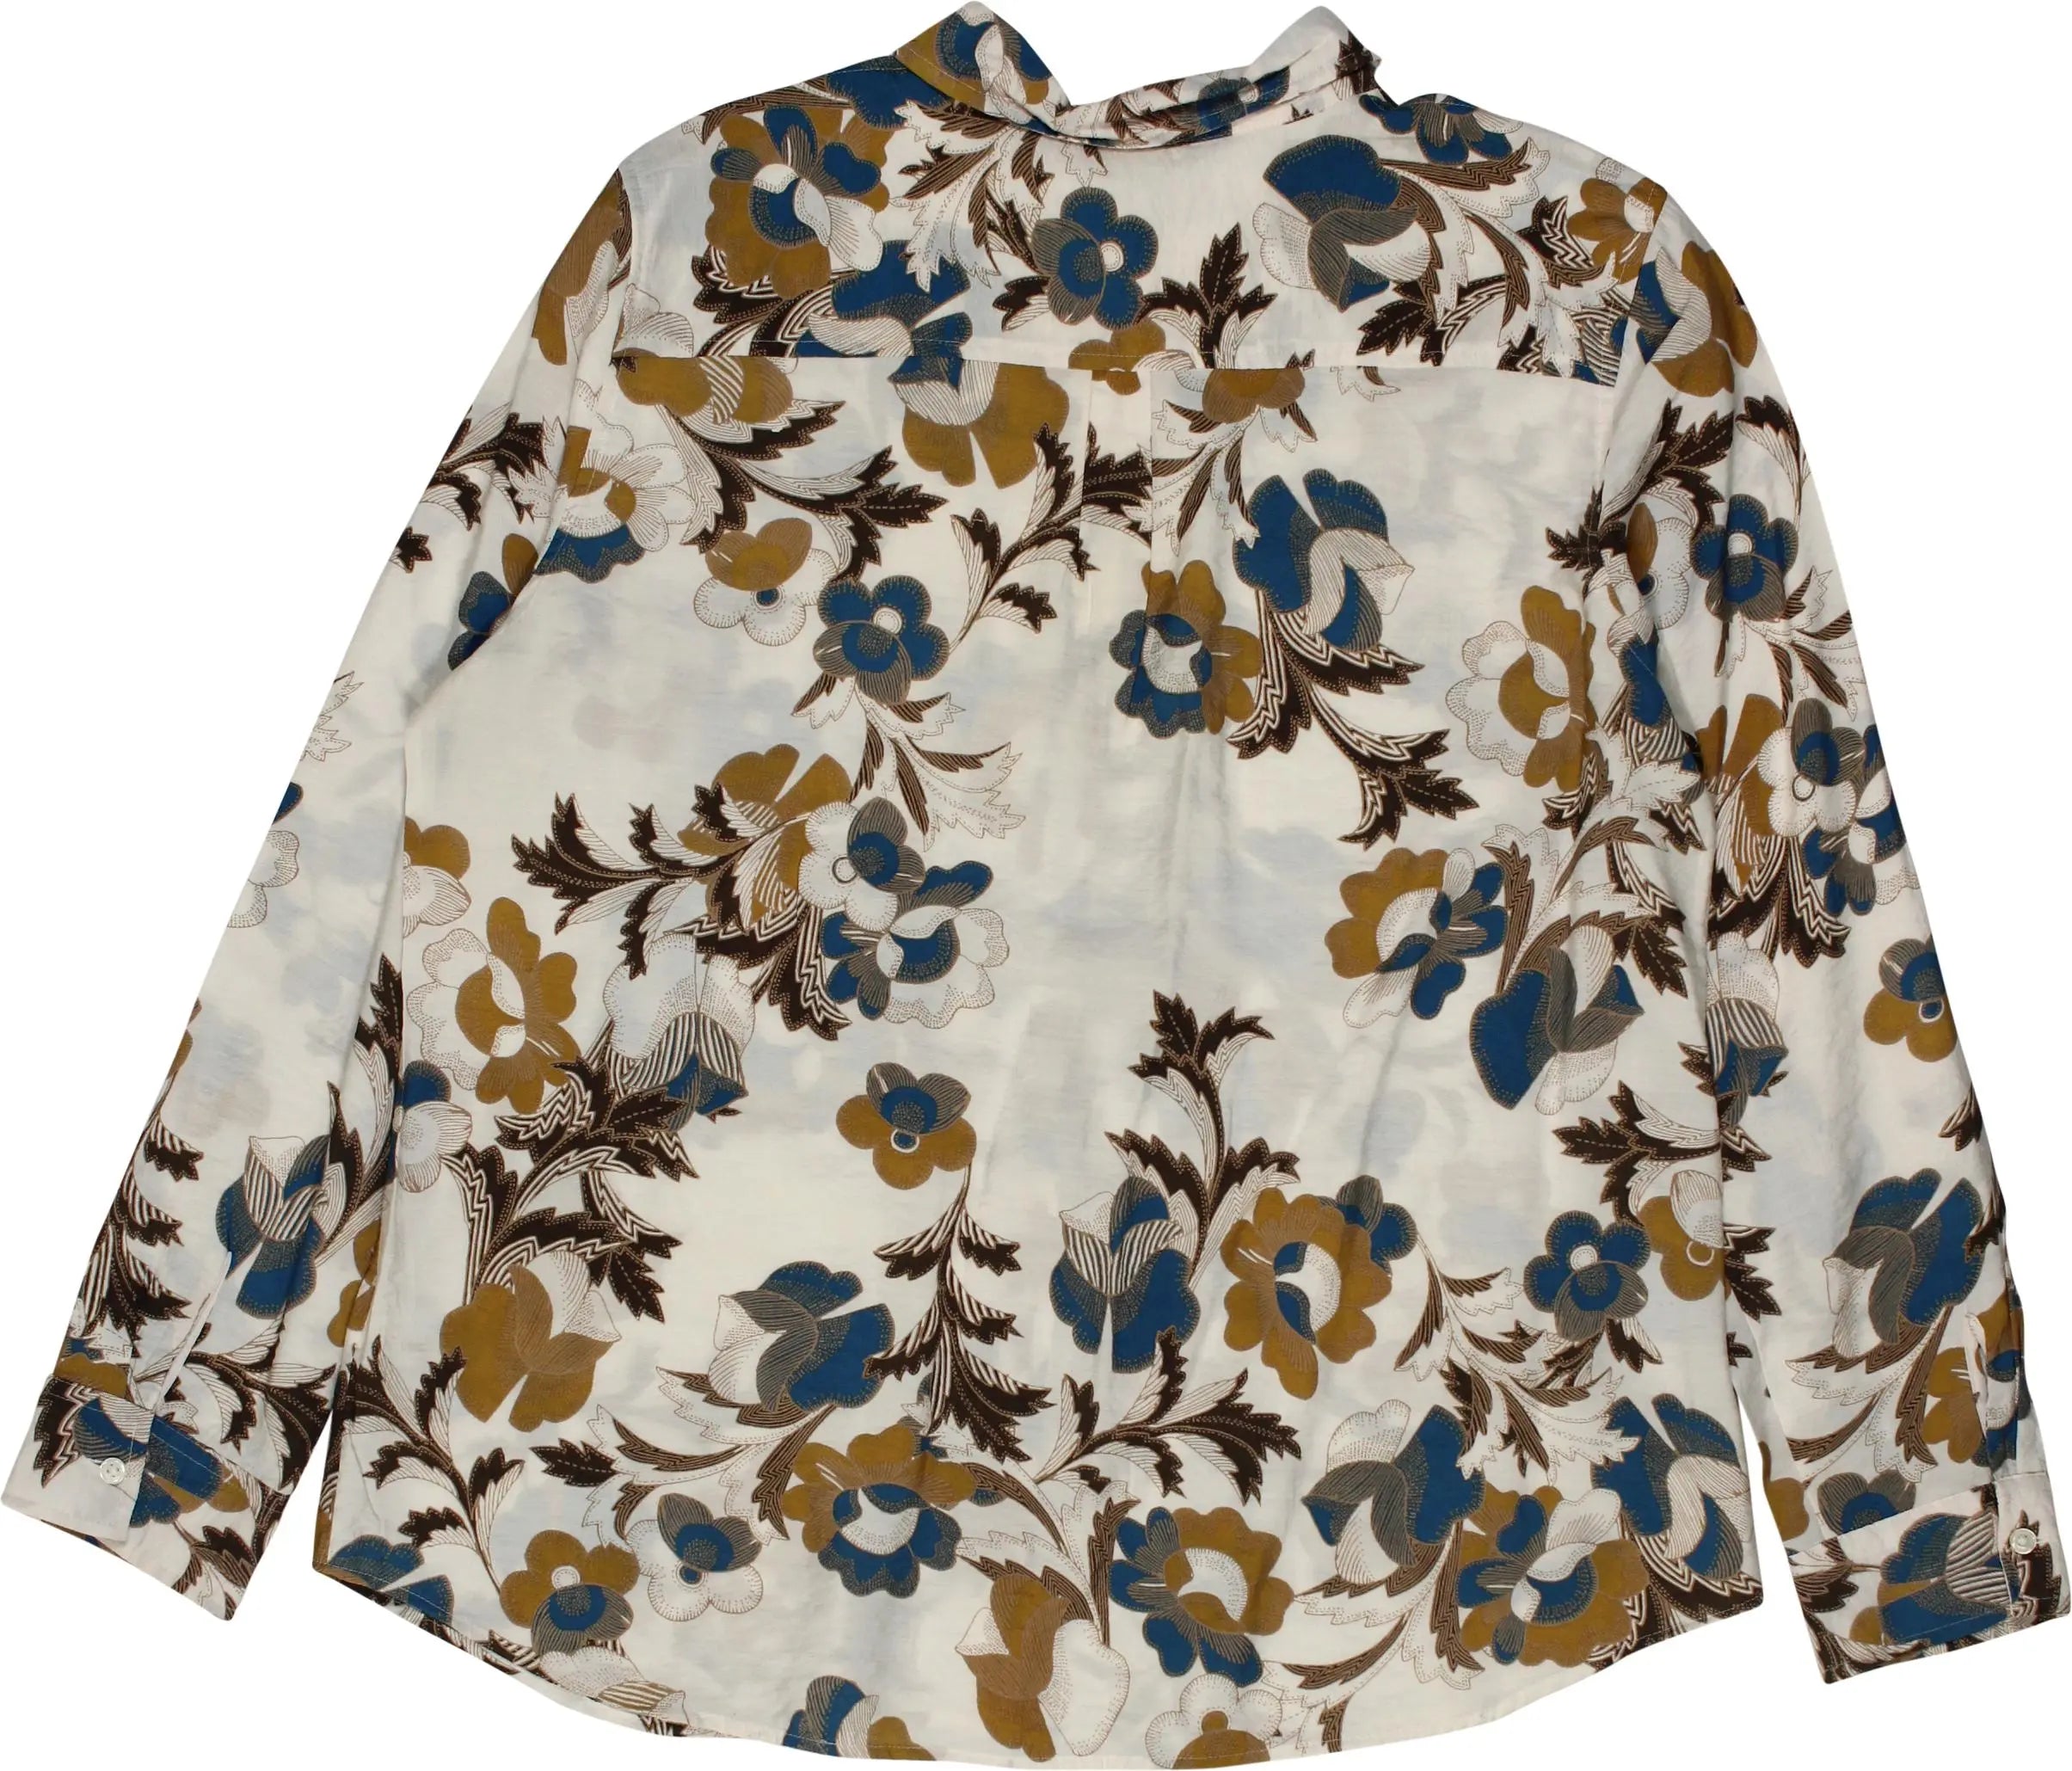 Van Heusen - Floral Blouse- ThriftTale.com - Vintage and second handclothing